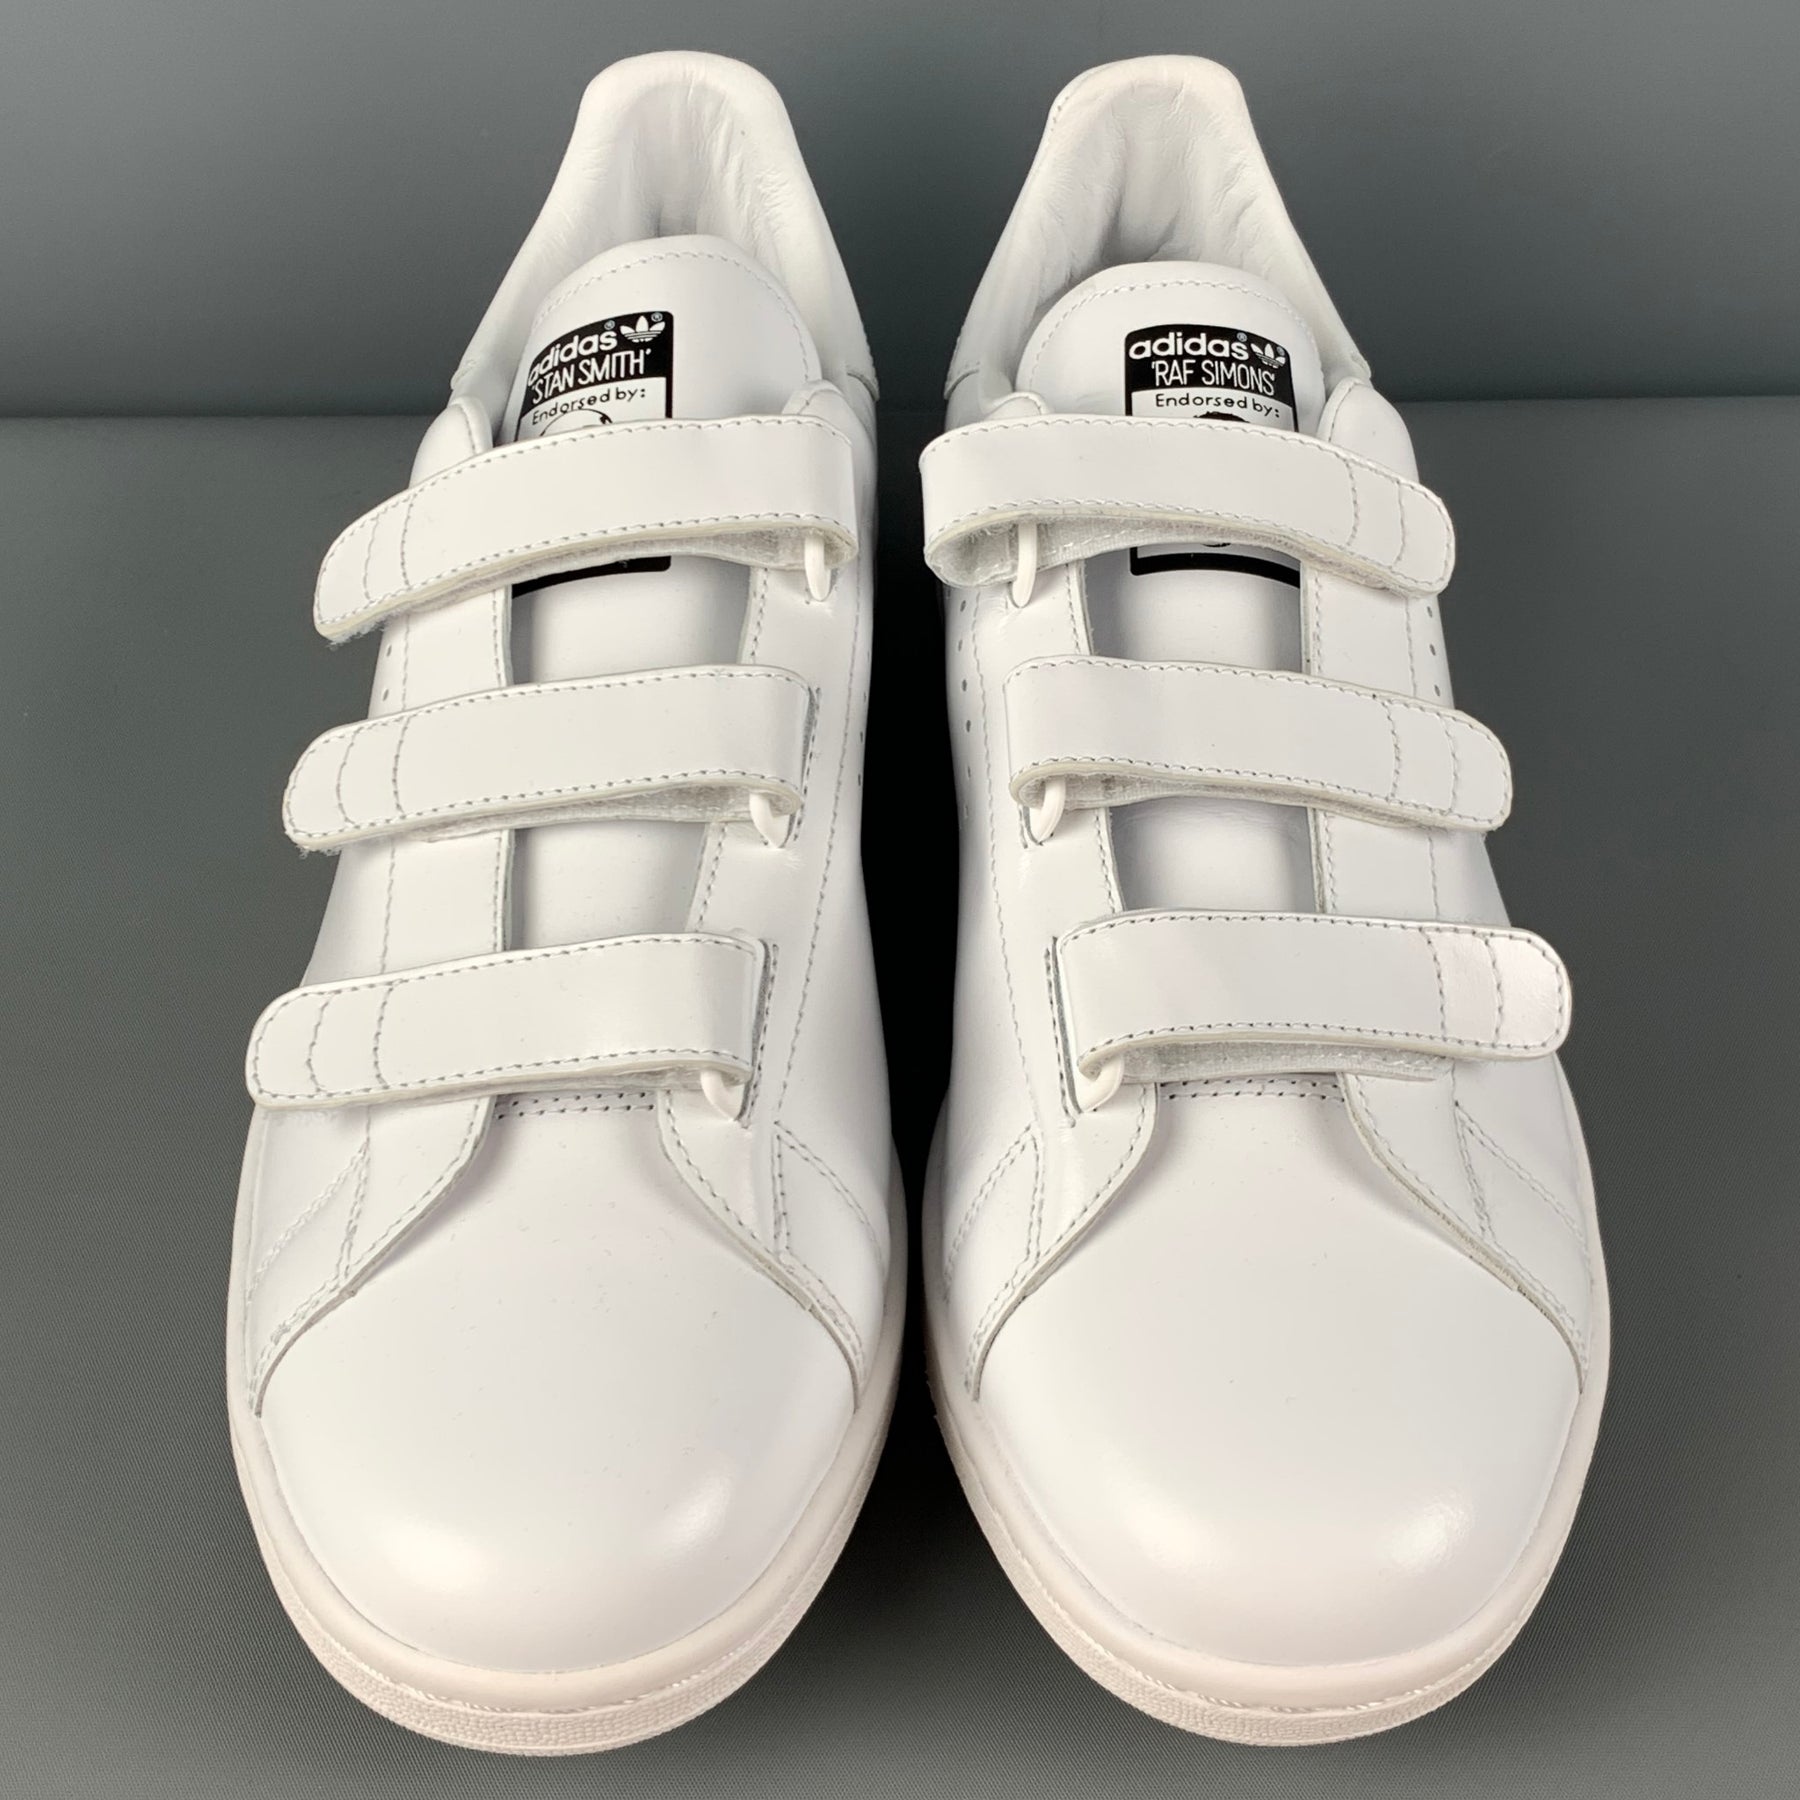 ADIDAS x RAF SIMONS Size 10.5 White Leather Velcro Closure Sneakers Generis Designer Consignment